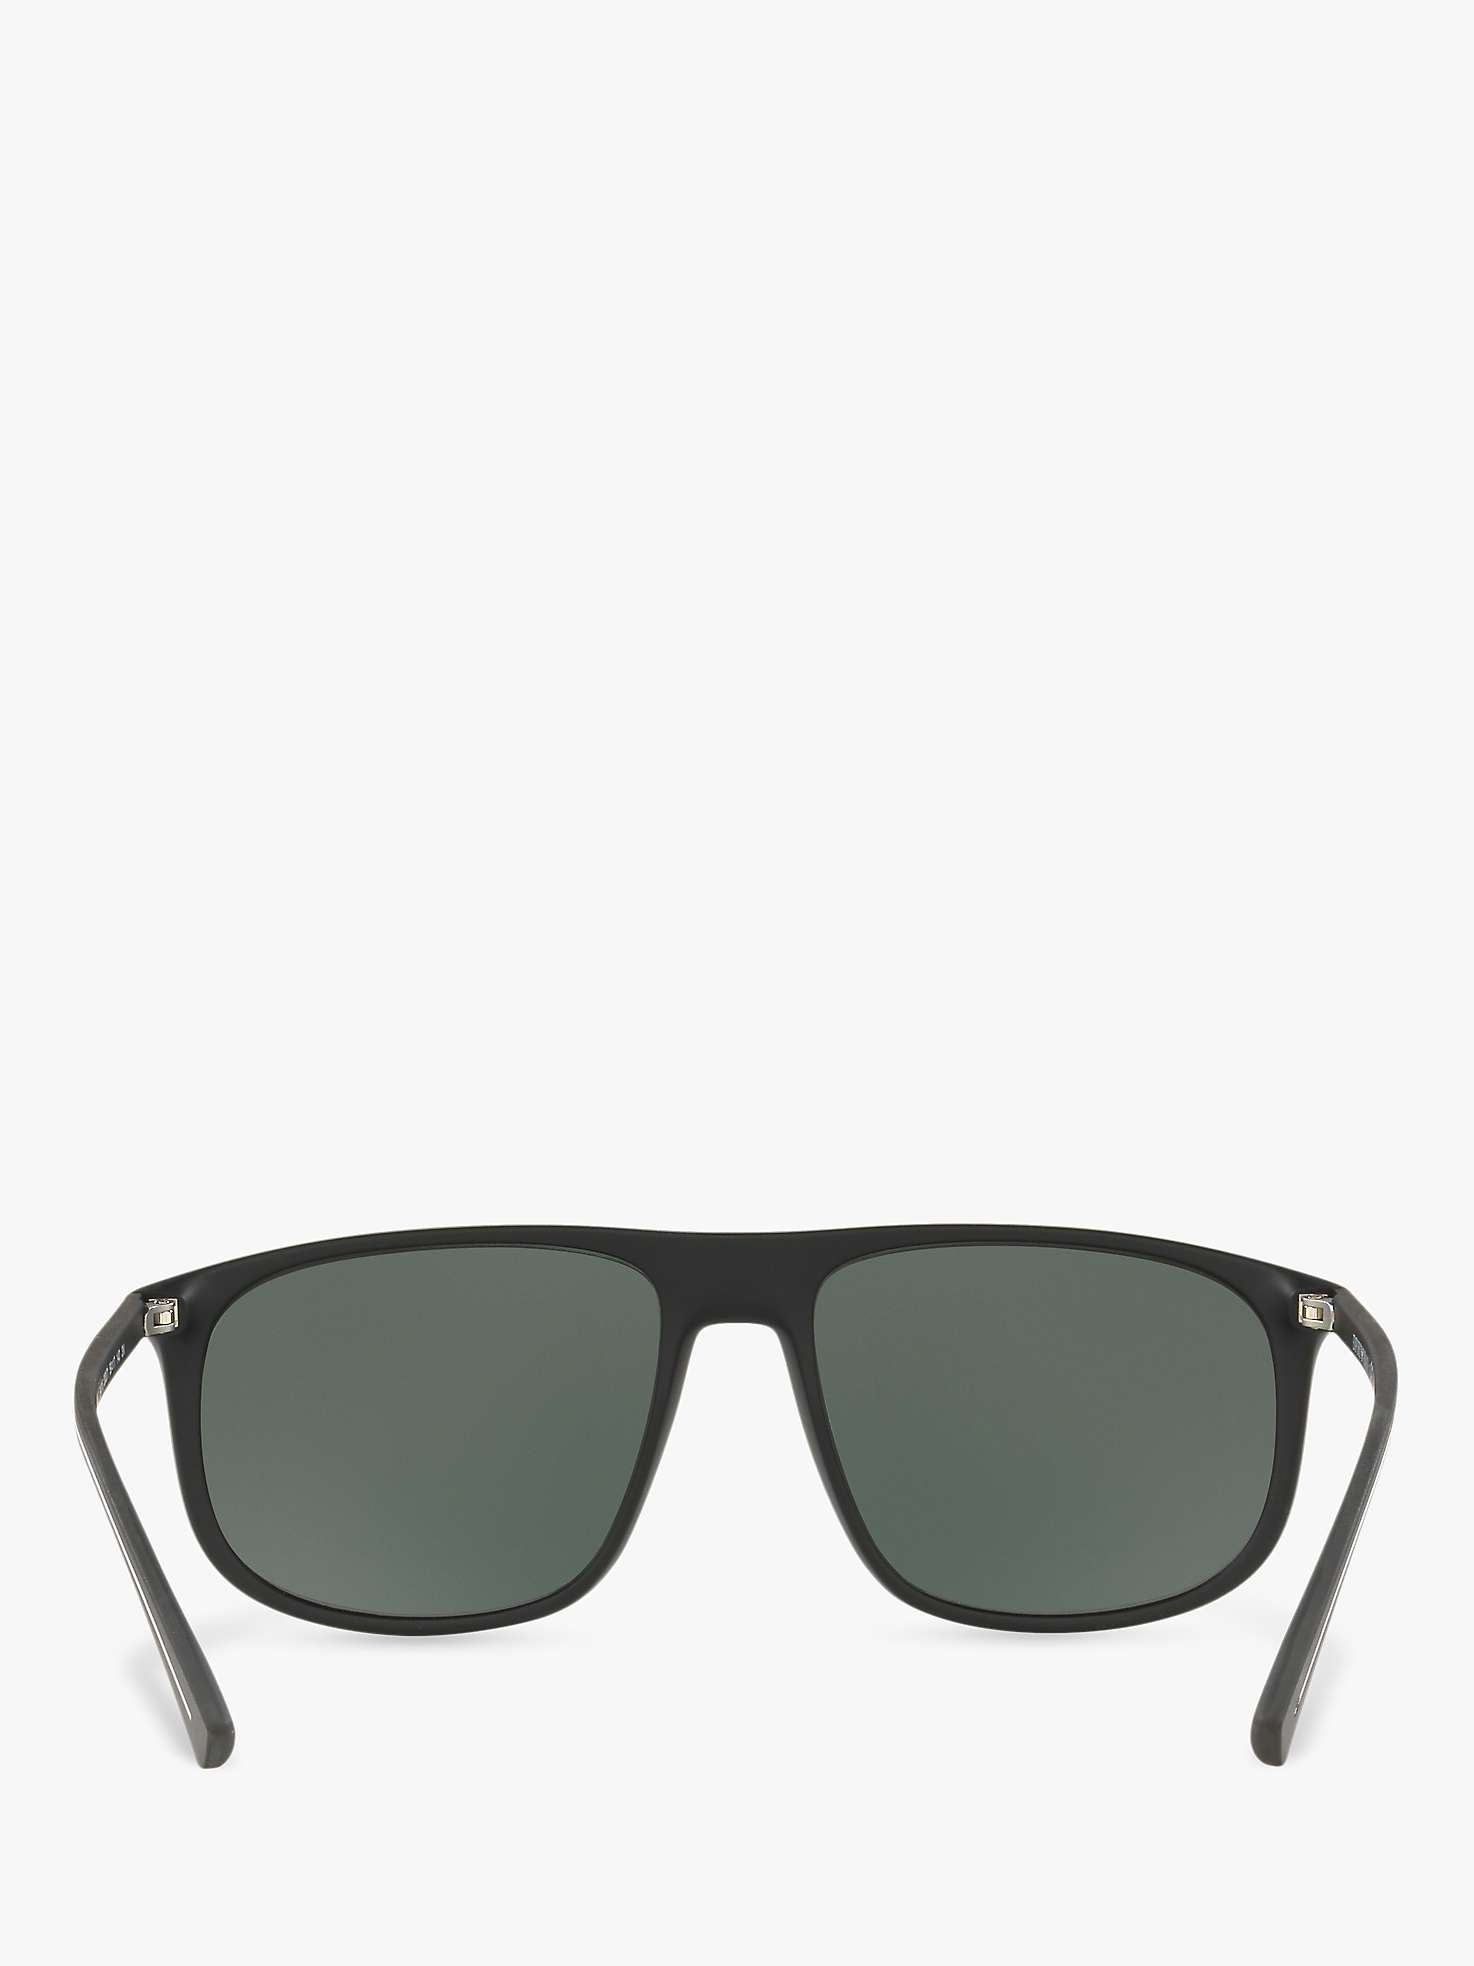 Buy Emporio Armani EA4118 Men's Rectangular Sunglasses, Black/Green Online at johnlewis.com